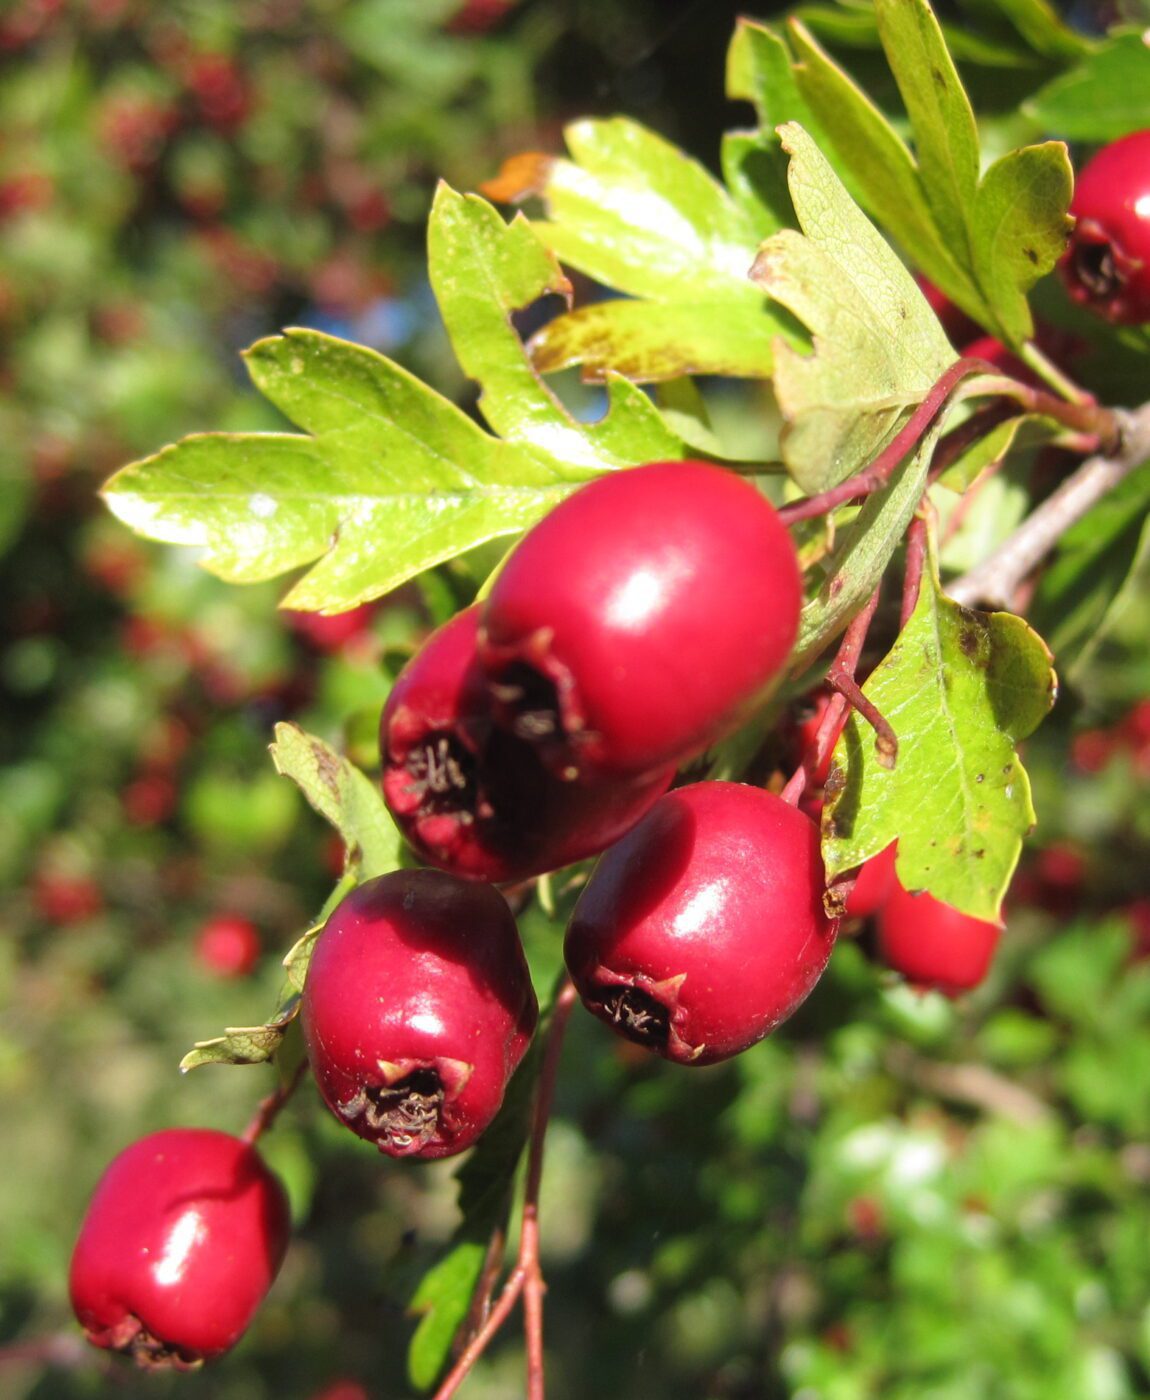 Hawthorn berries in September